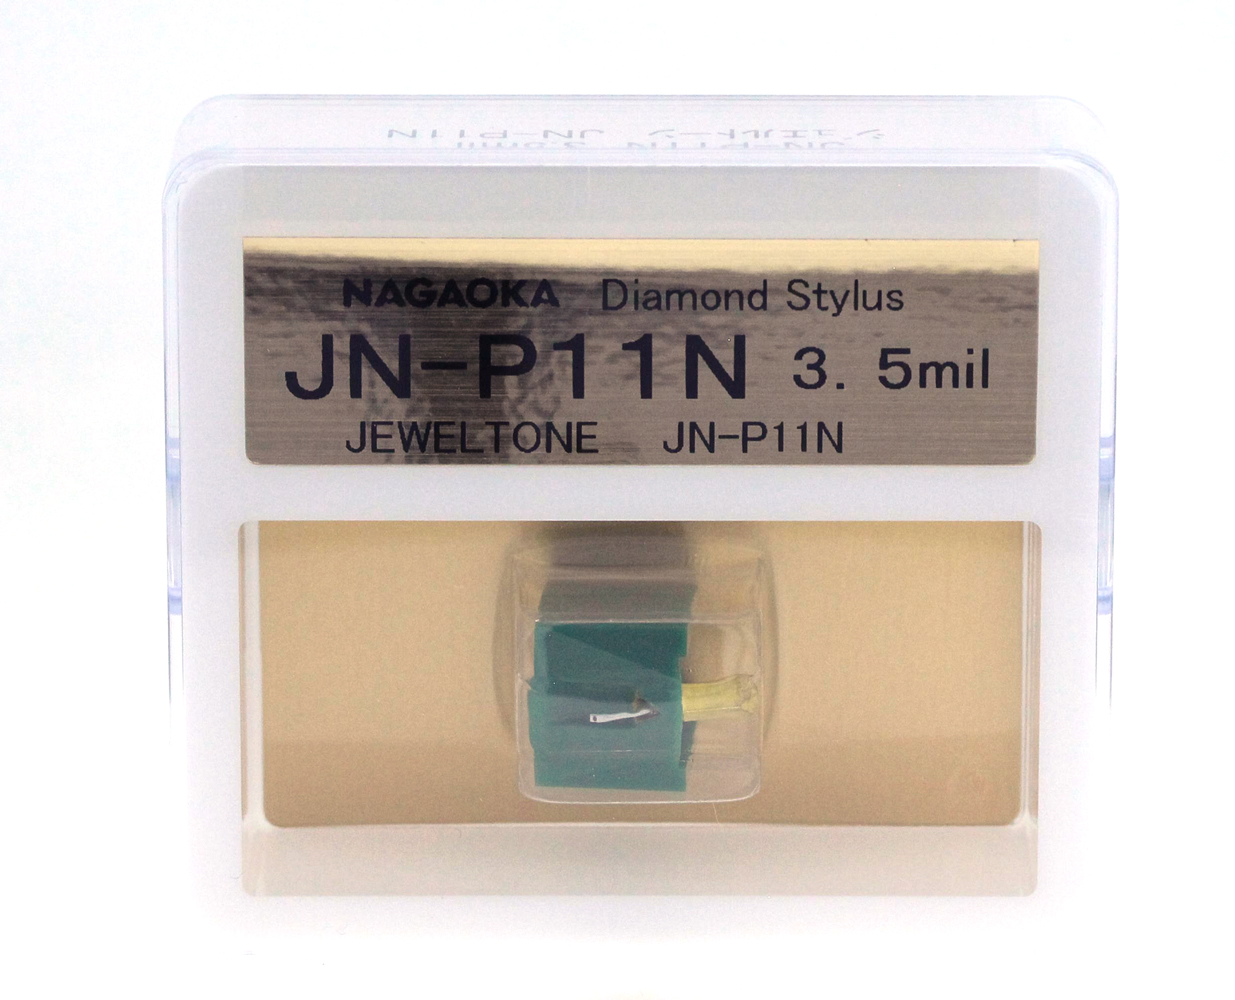 Nagaoka N-MP3.5 NMP3.5 / JN-P11N stylus with 3.5 mil diamond (78 RPM stylus)